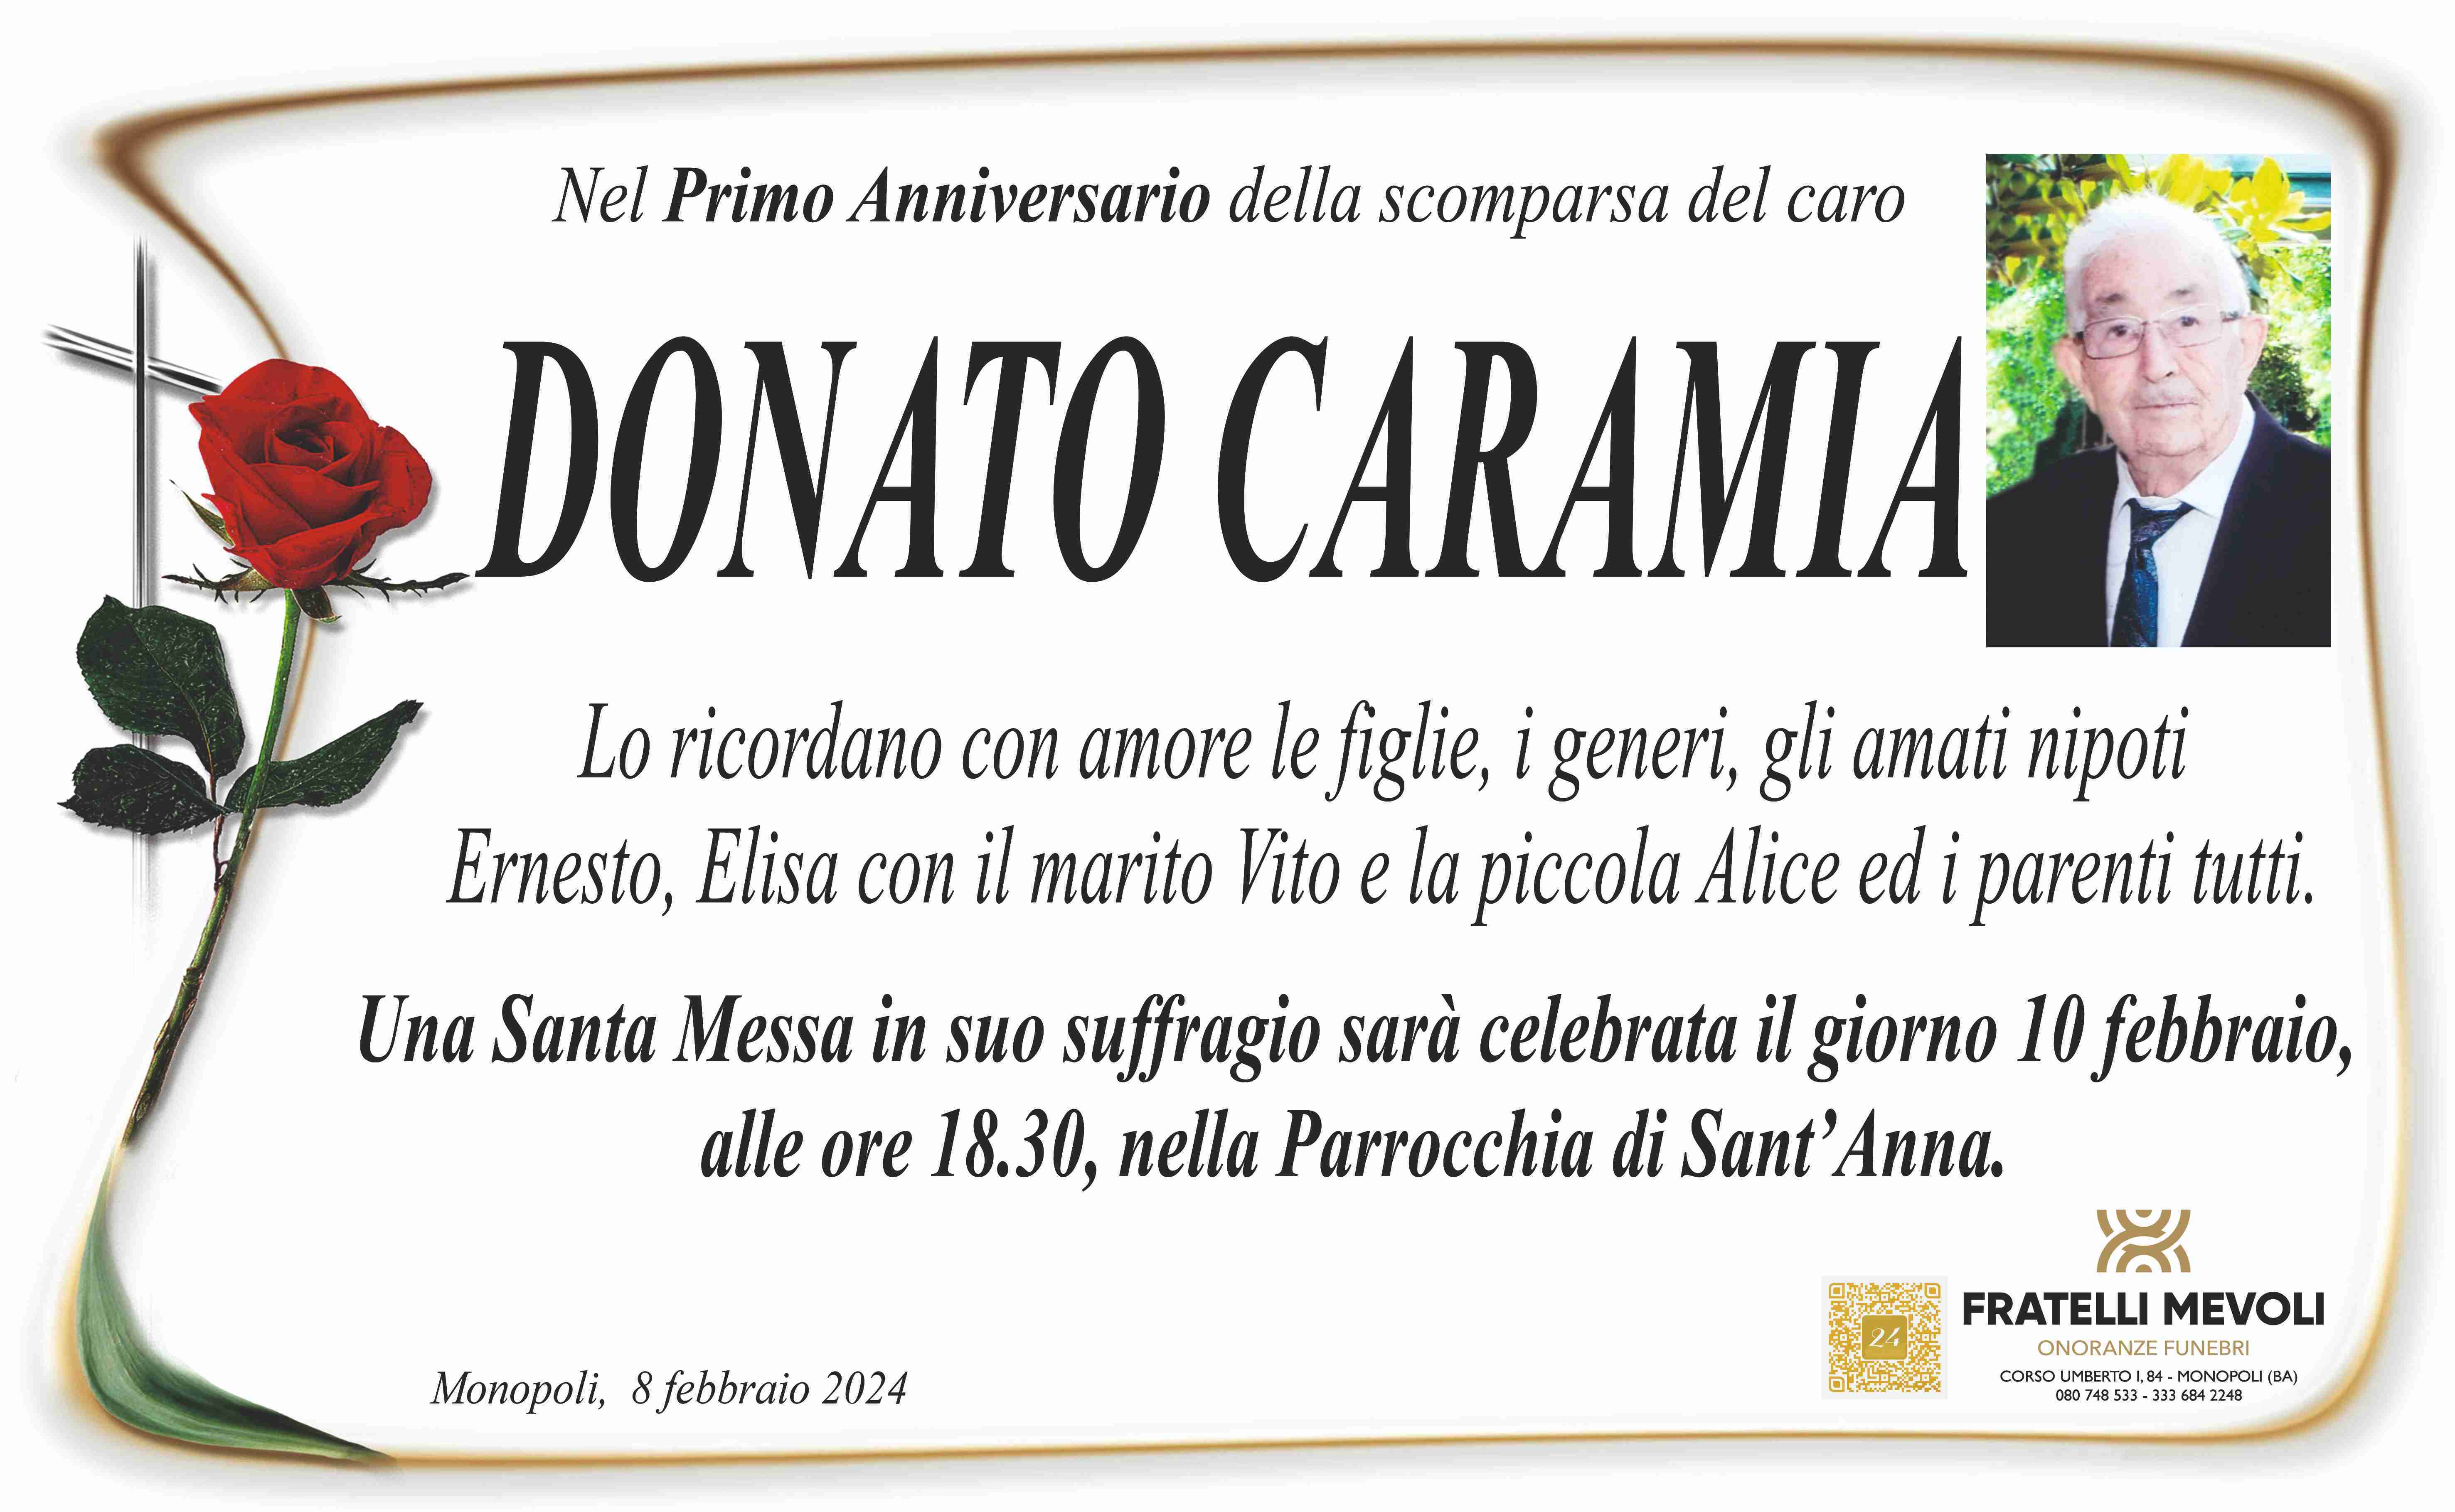 Donato Caramia